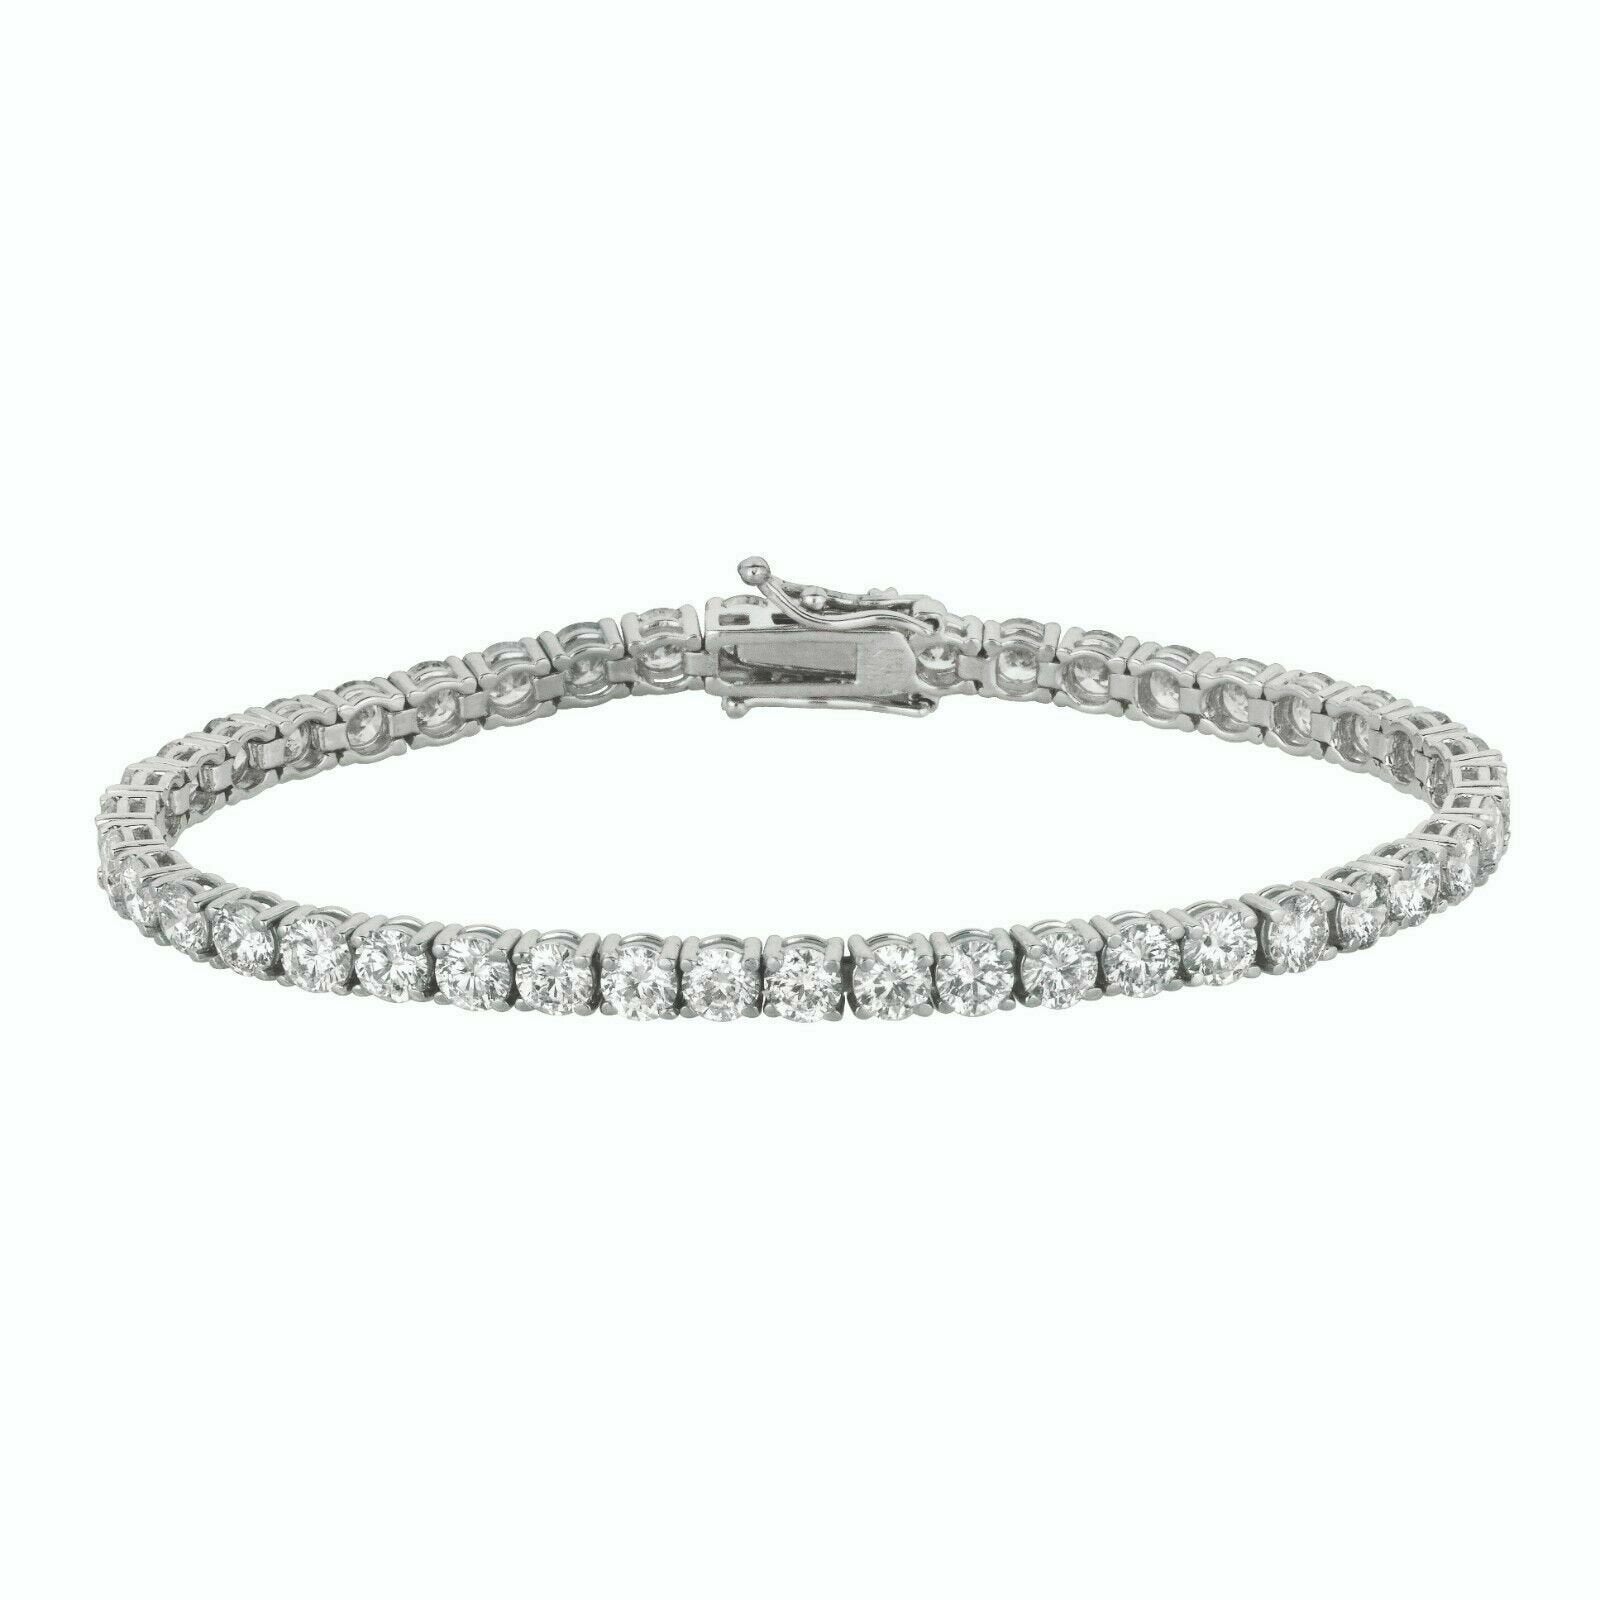 4.57 Carat Natural Diamond Silver Tennis Bracelet 14K White Gold by Davizi Jewels NYC"